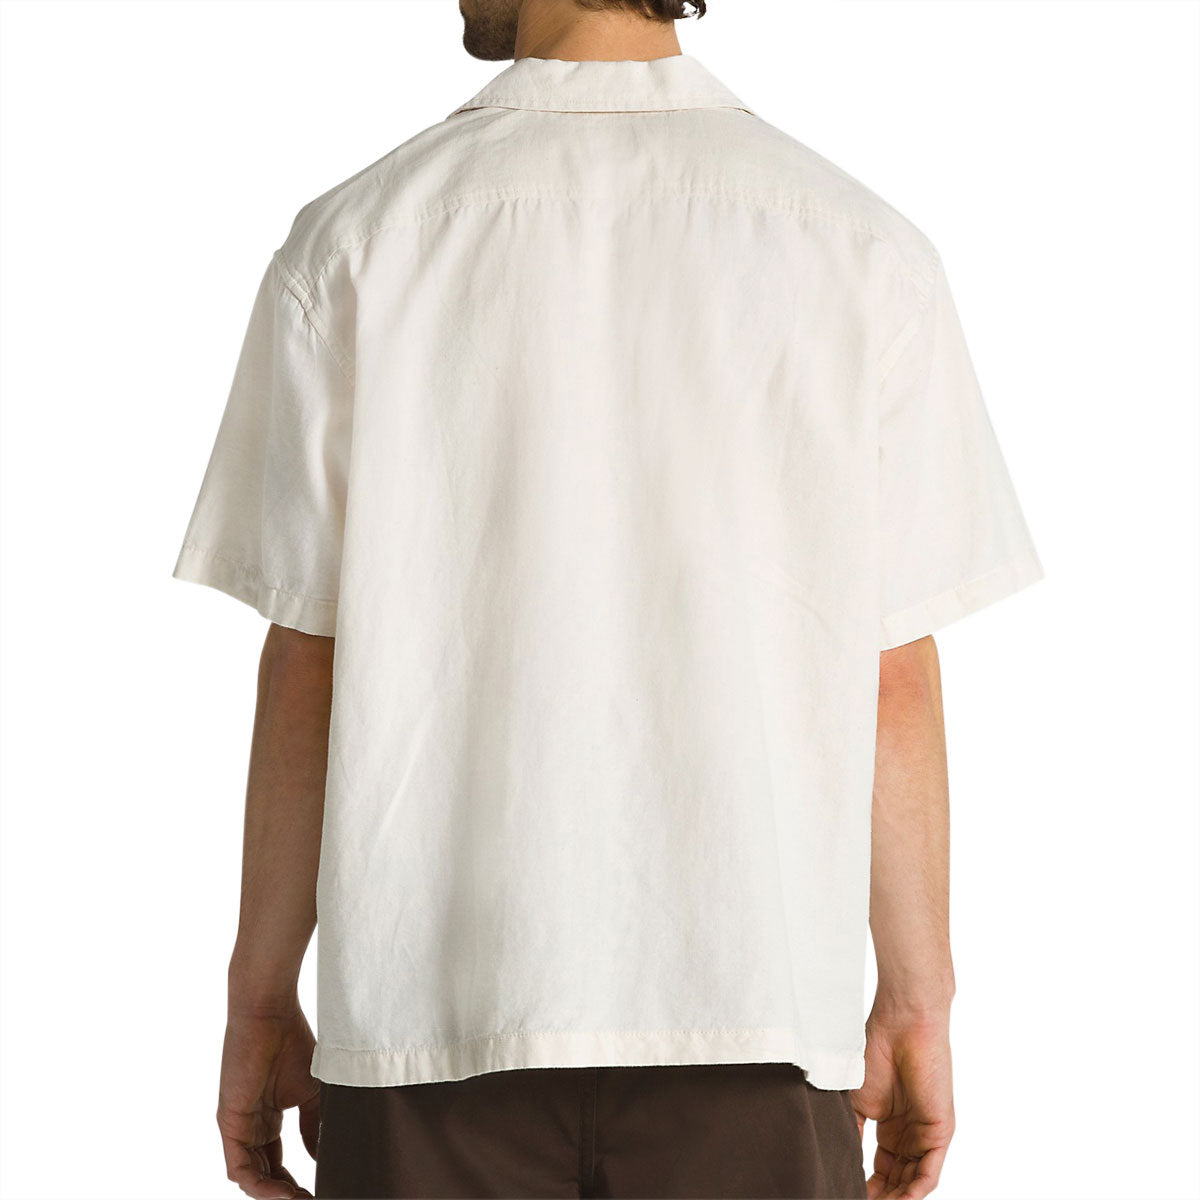 Vans Mikey Feb Shirt - Natural Cotton image 2